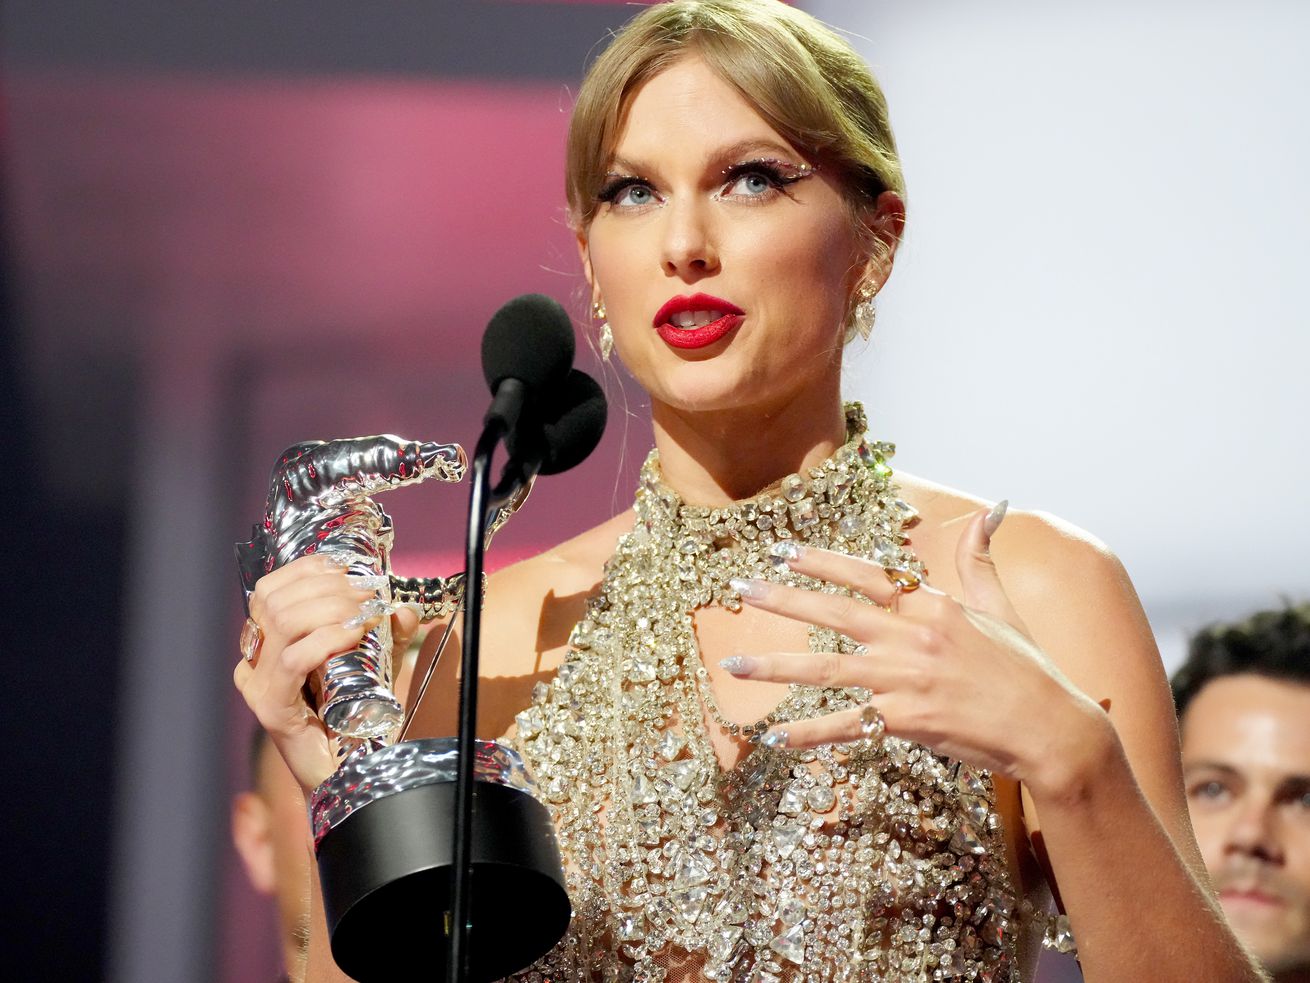 Does Taylor Swift want an Oscar? Perhaps (ahem) All Too Well.